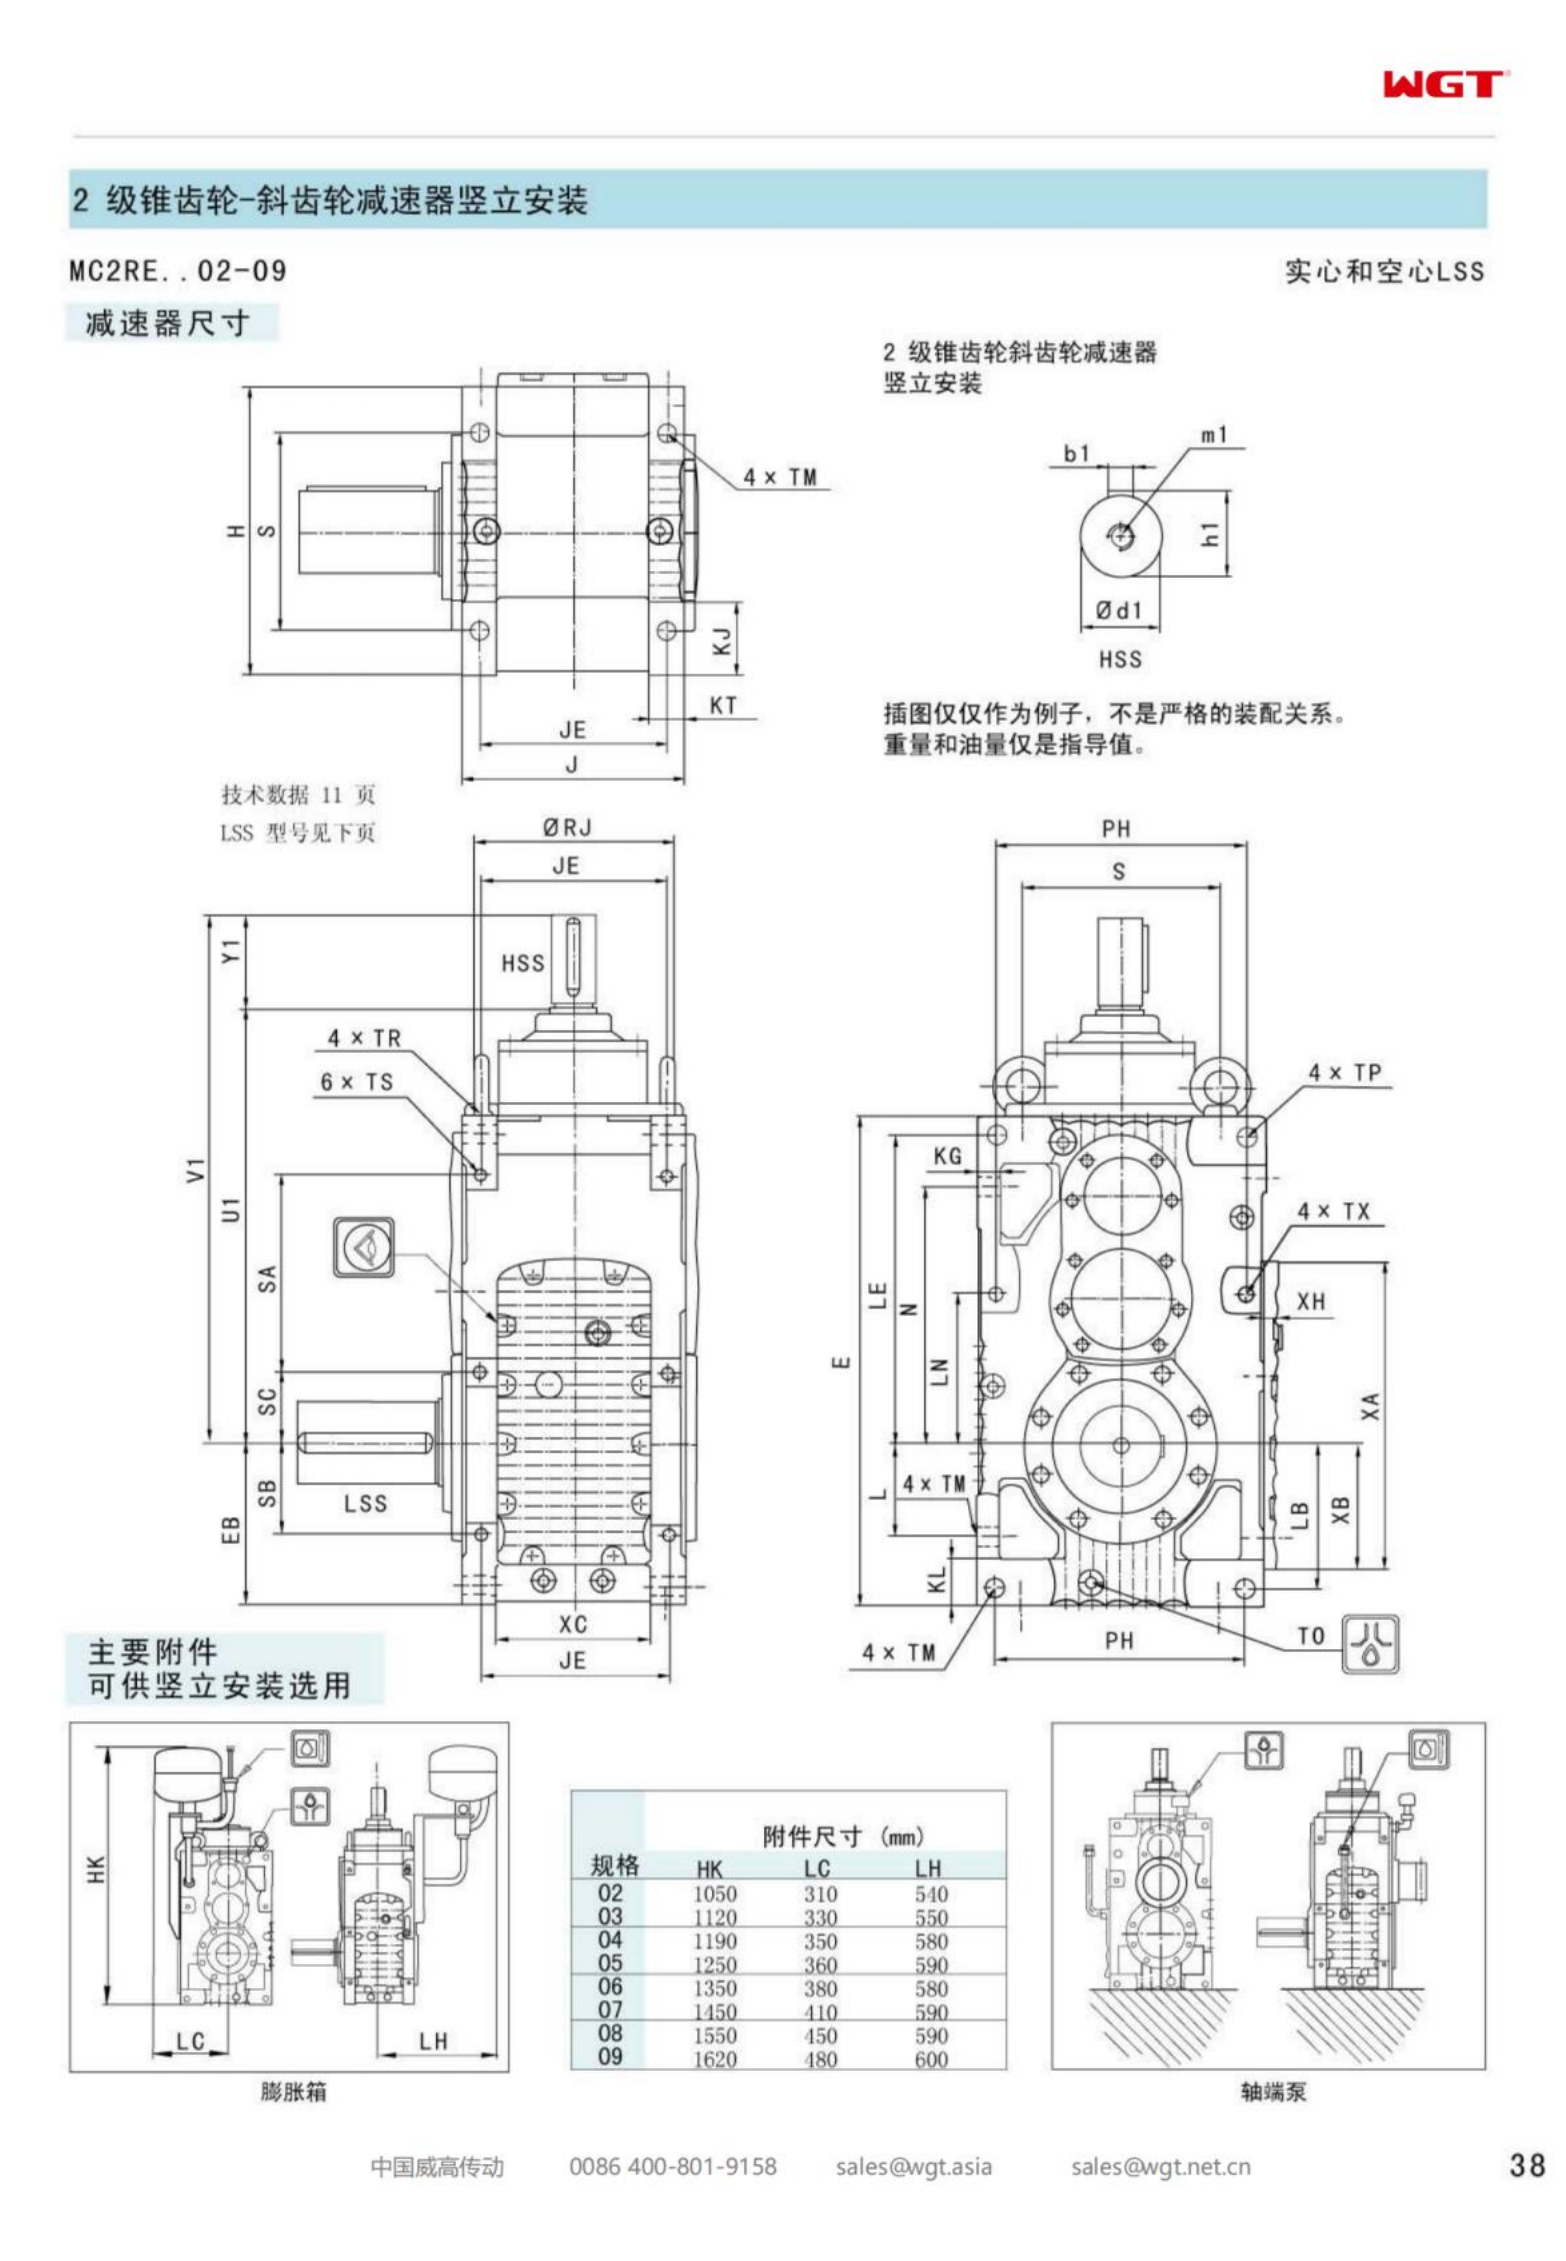 MC2REHF04 replaces _SEW_MC_Series gearbox (patent)